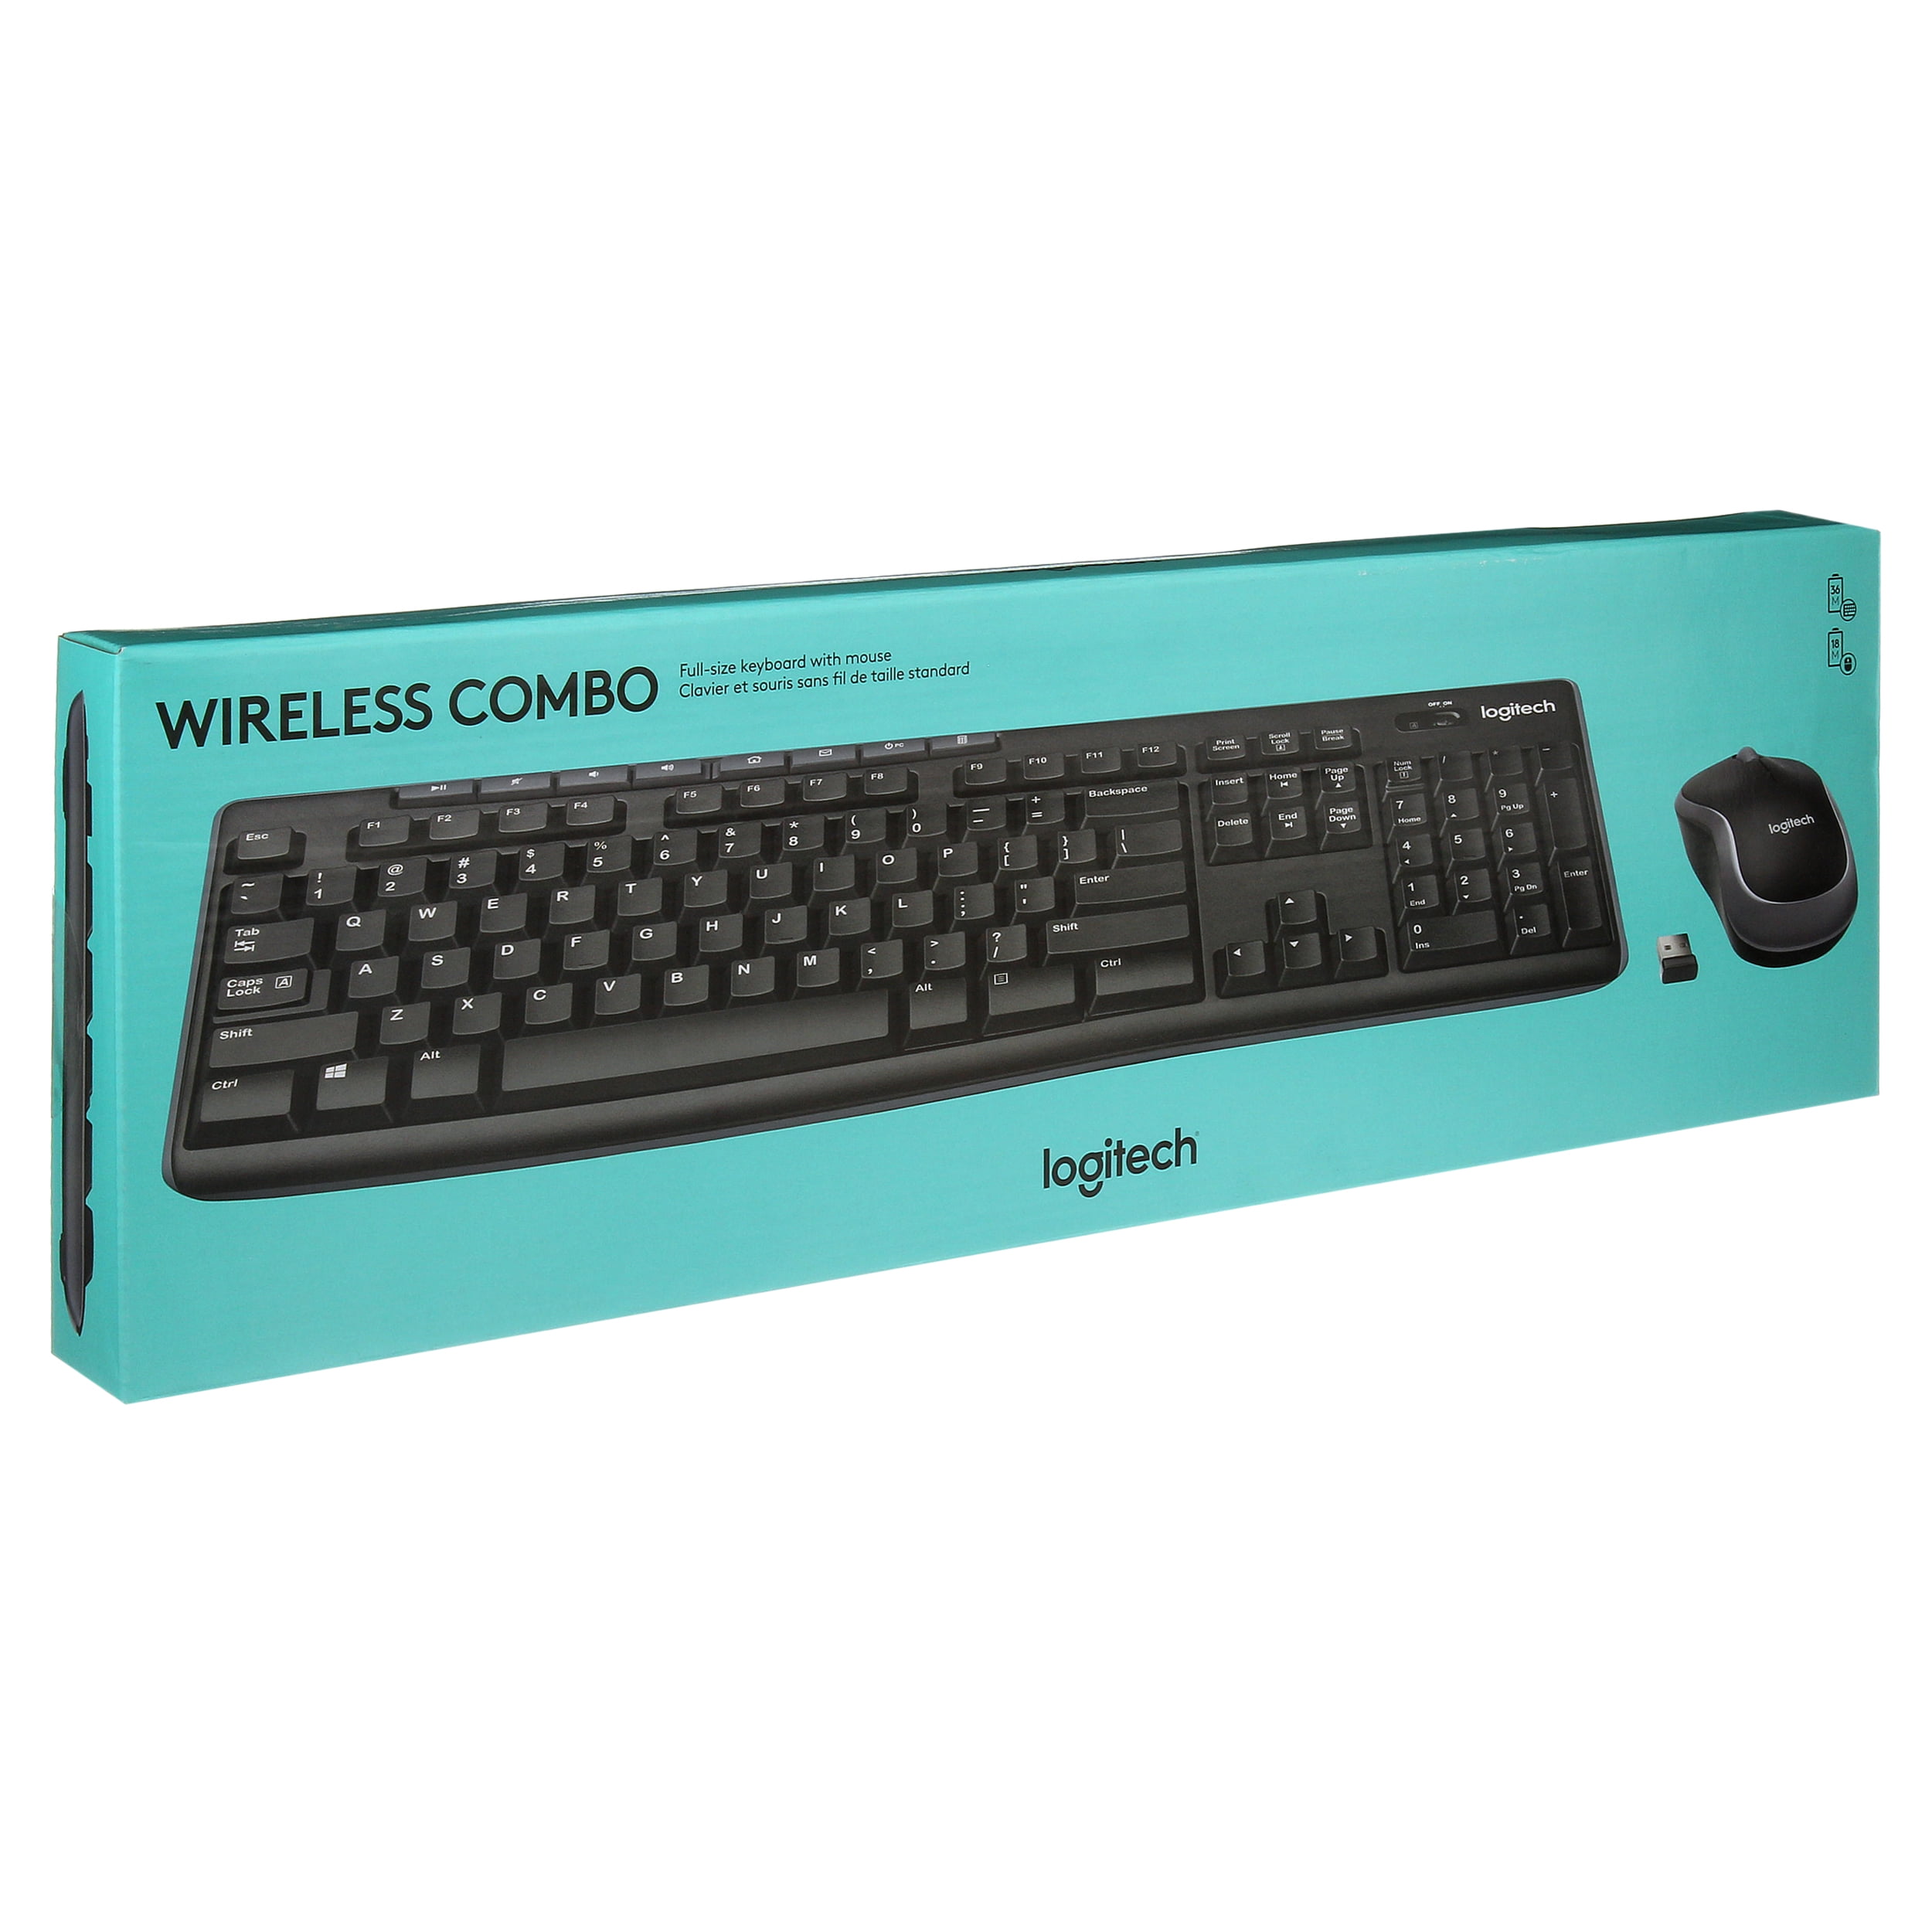 logitech wireless keyboard xbox one